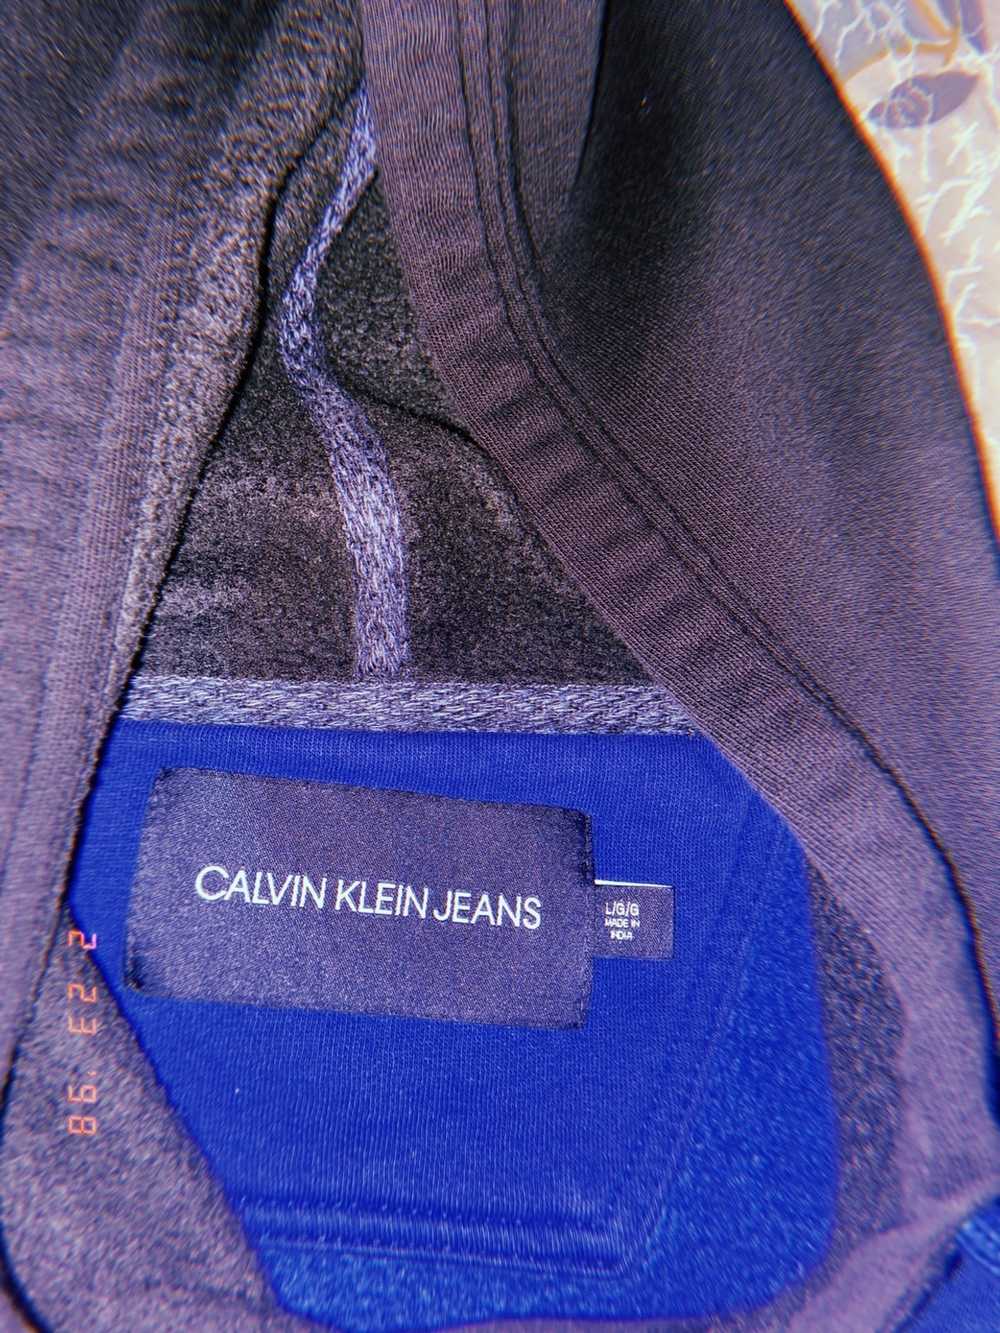 Calvin Klein × Pacsun Calvin Klein Jeans Hoodie - image 3